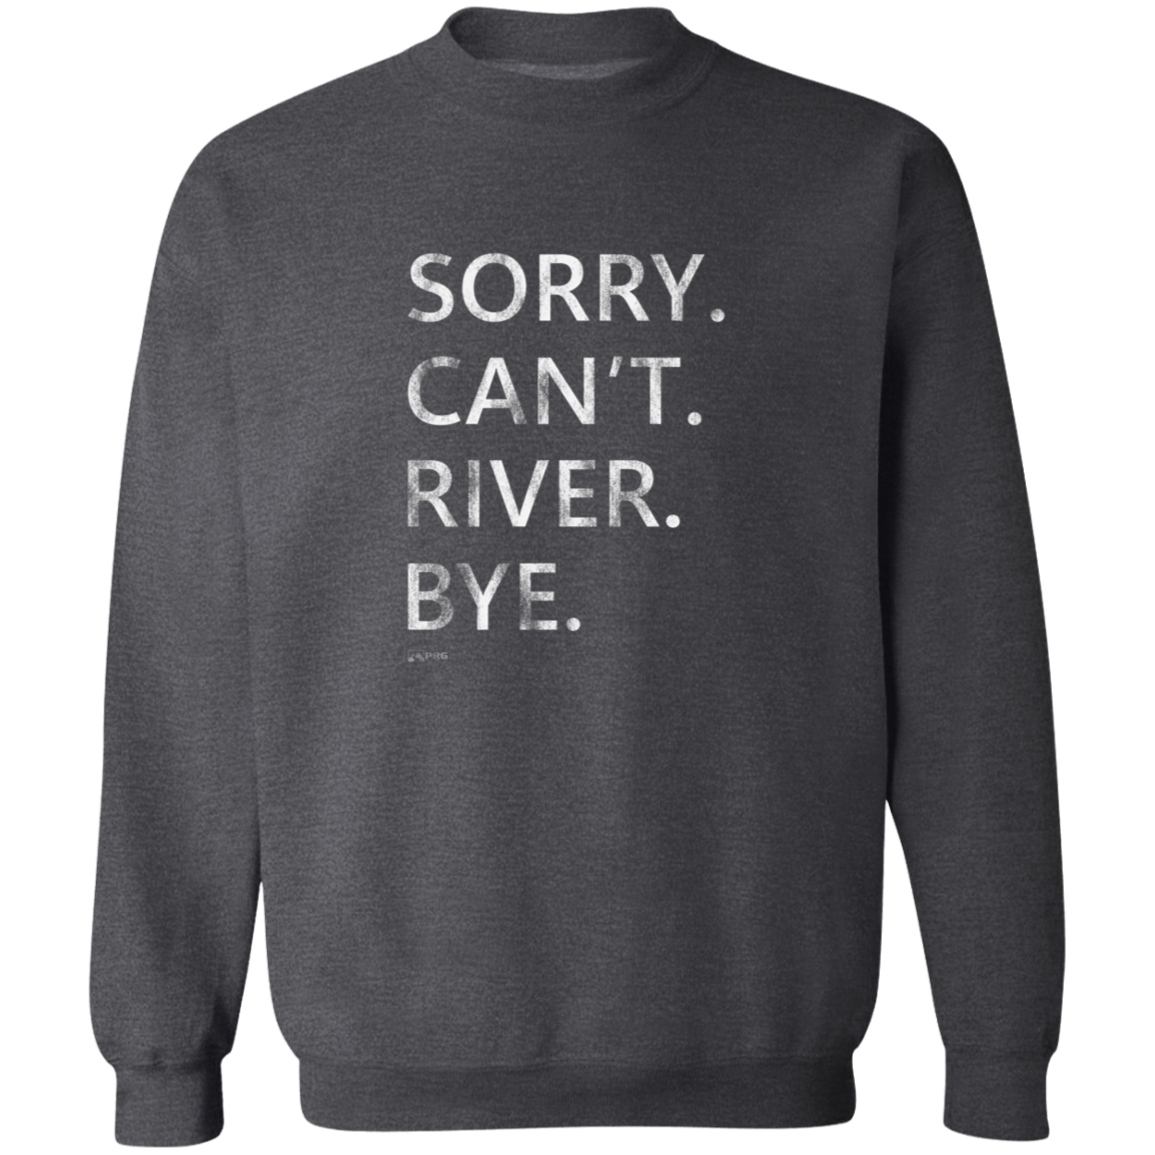 Sorry. Can't. River. Bye. - Sweatshirt